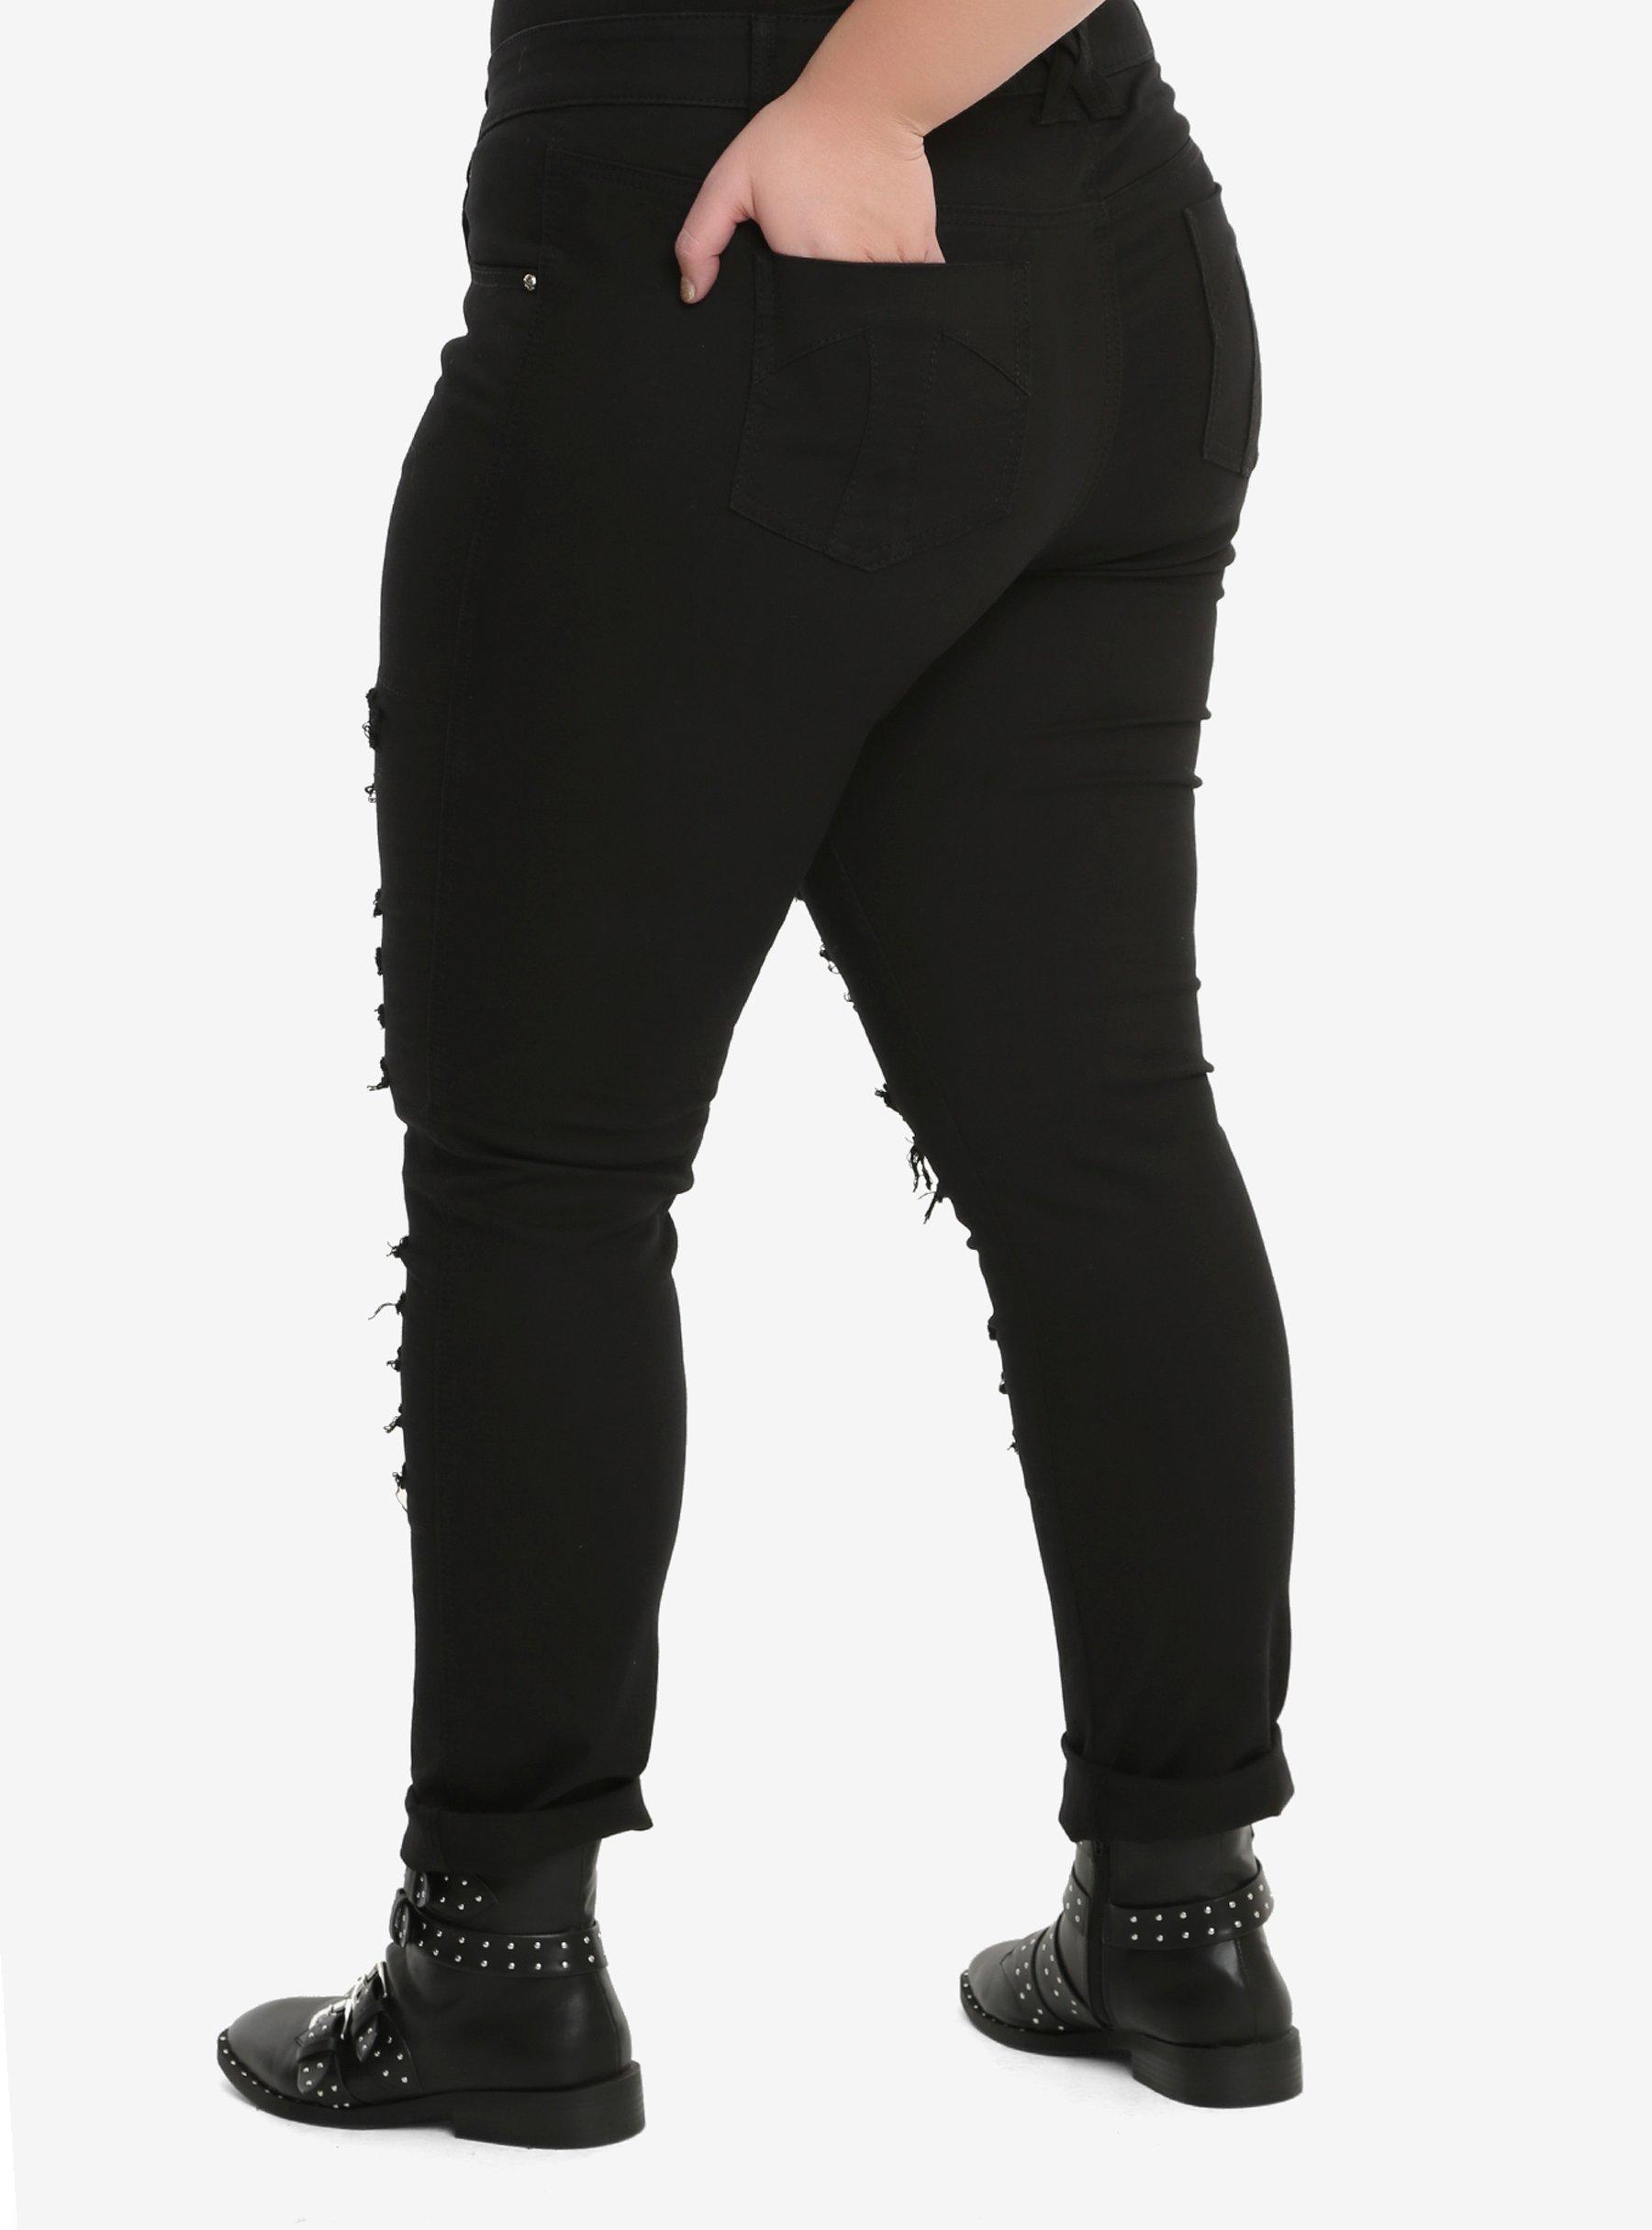 Royal Bones By Tripp Black Fishnet Skinny Jeans Plus Size, BLACK, alternate